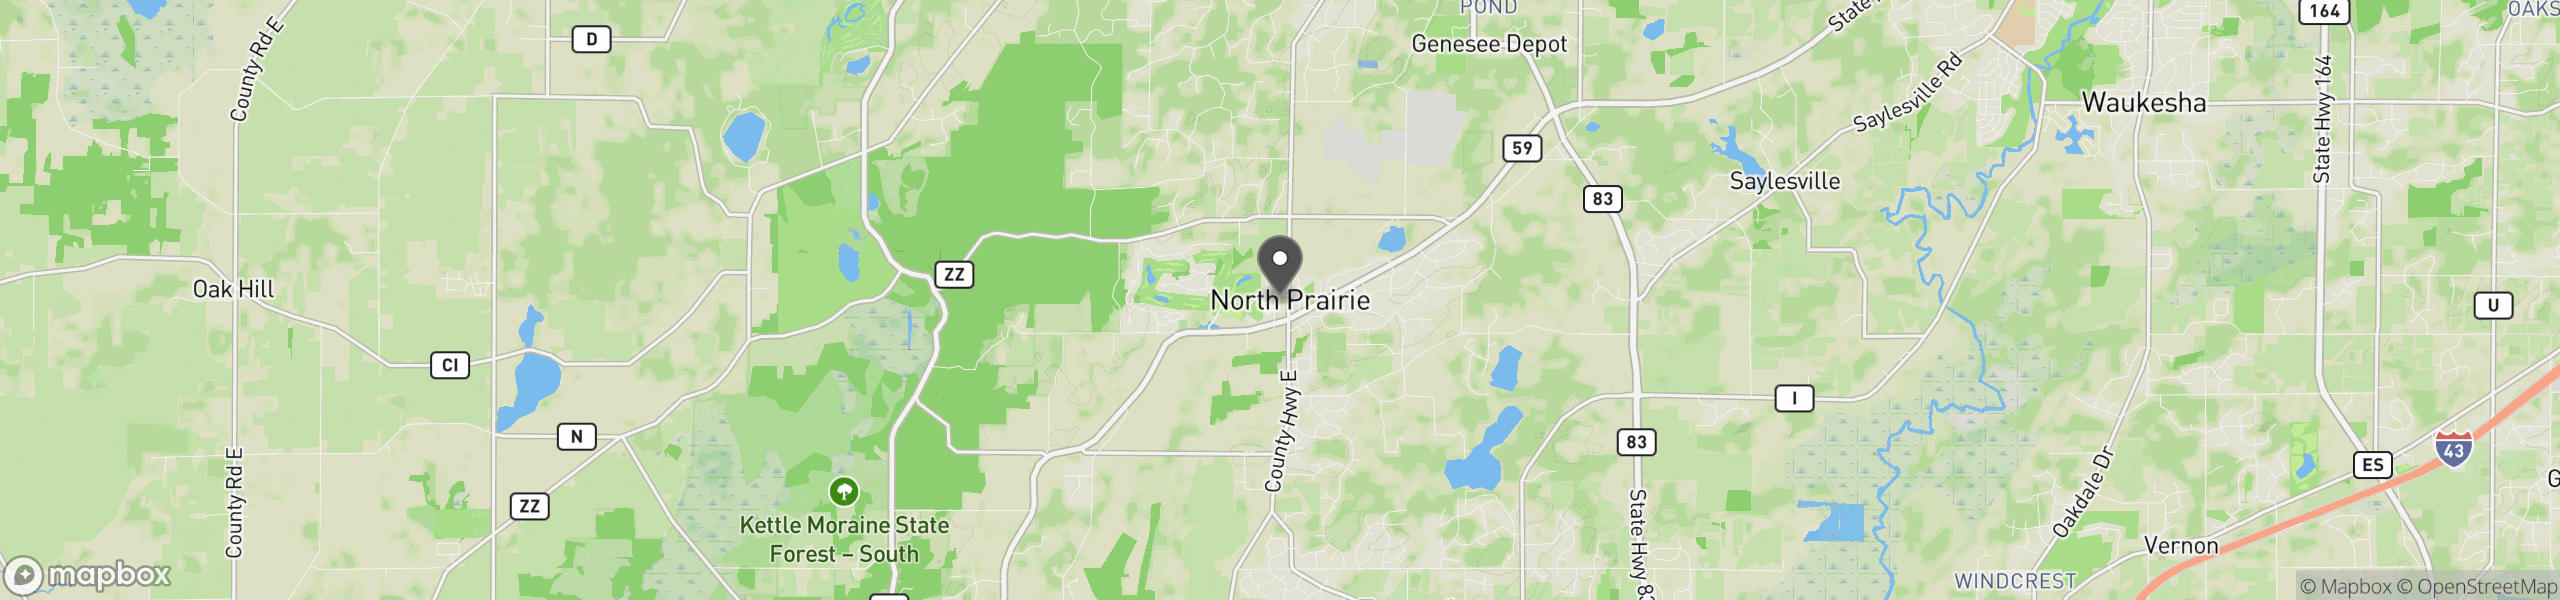 North Prairie, WI 53153